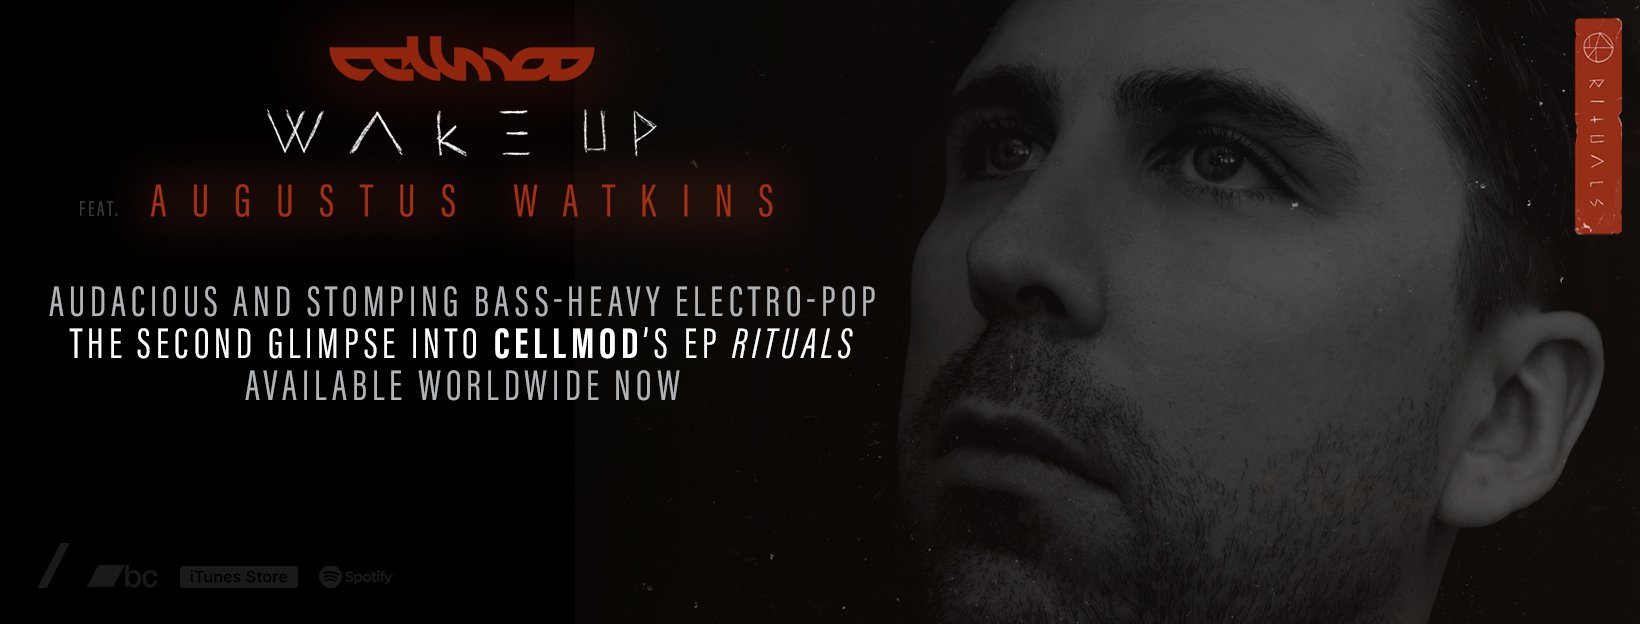 Cellmod - Wake Up feat. Augustus Watkins